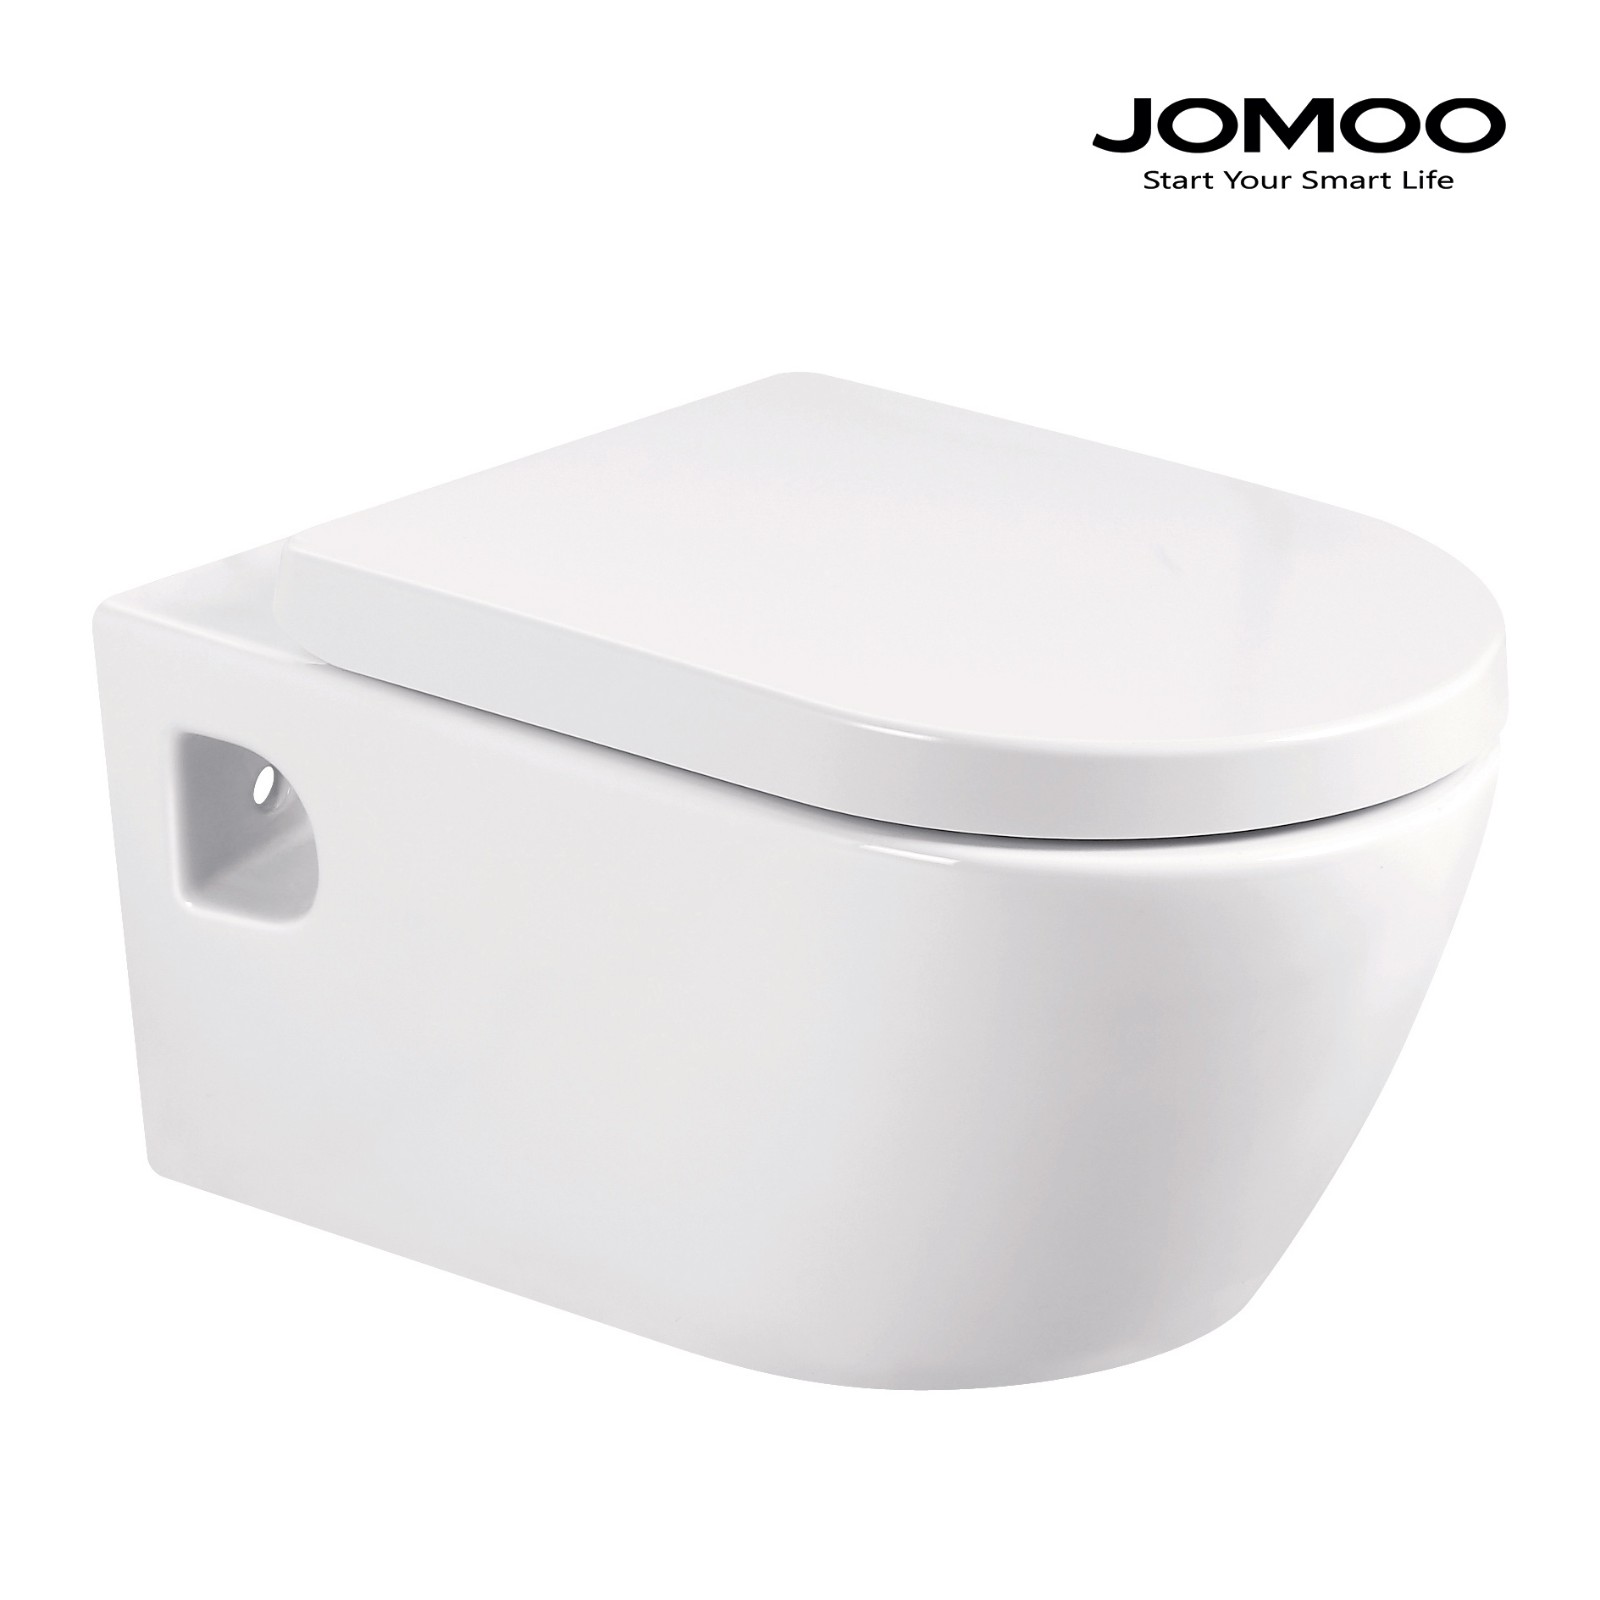 JOMOO wall-mounted toilet.jpg